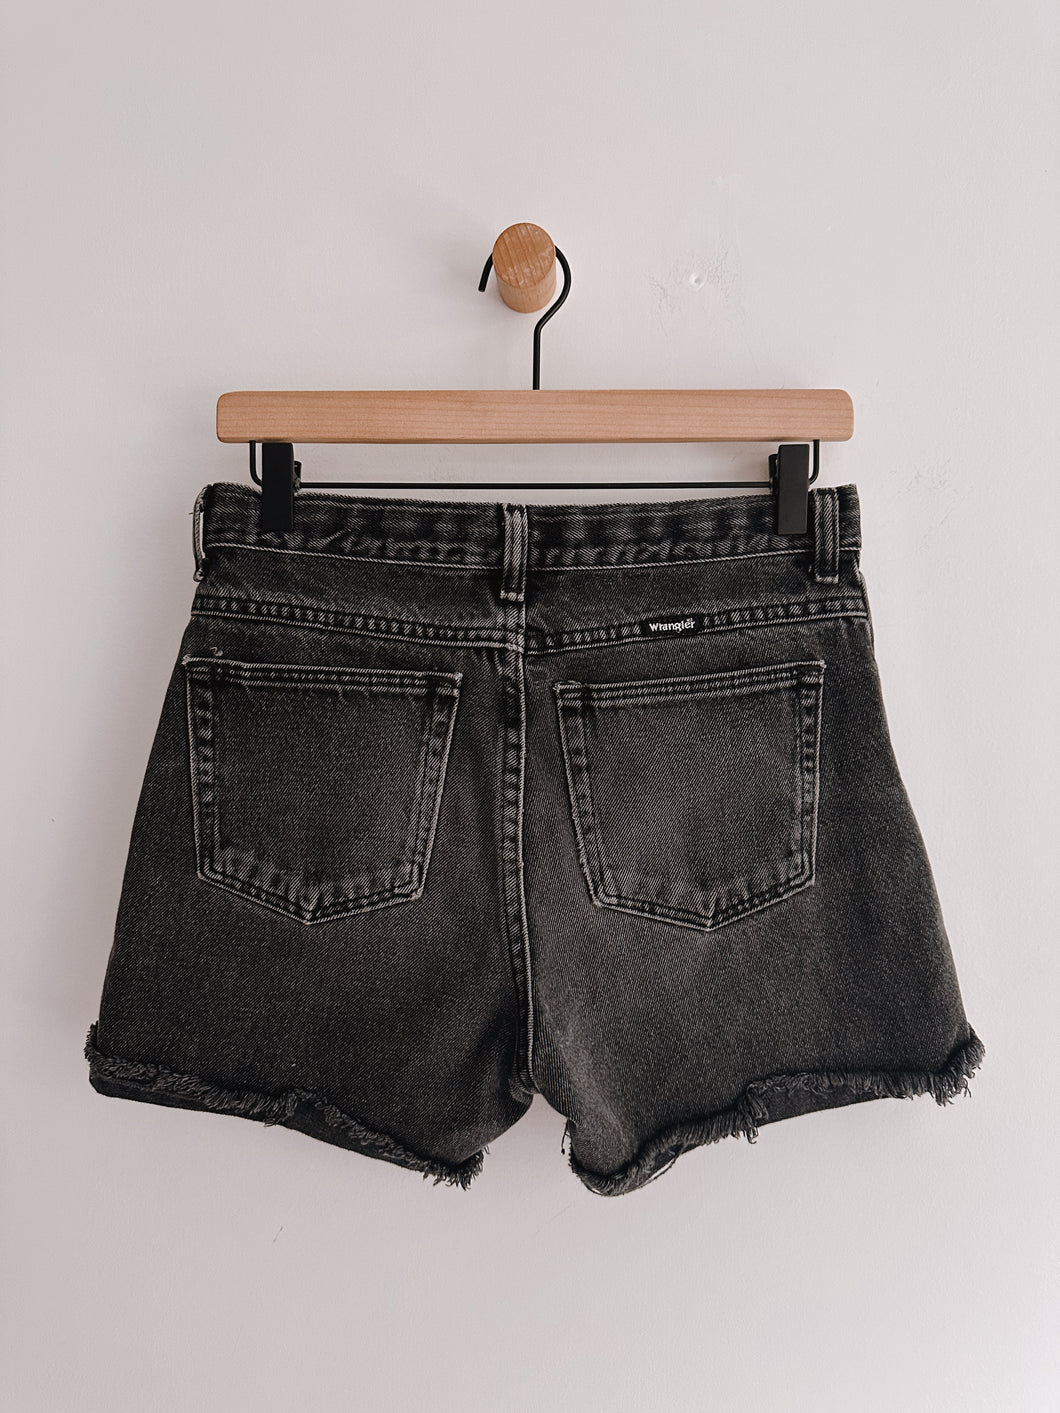 Vintage High Rise Wrangler Black Denim Shorts - Size 4/6